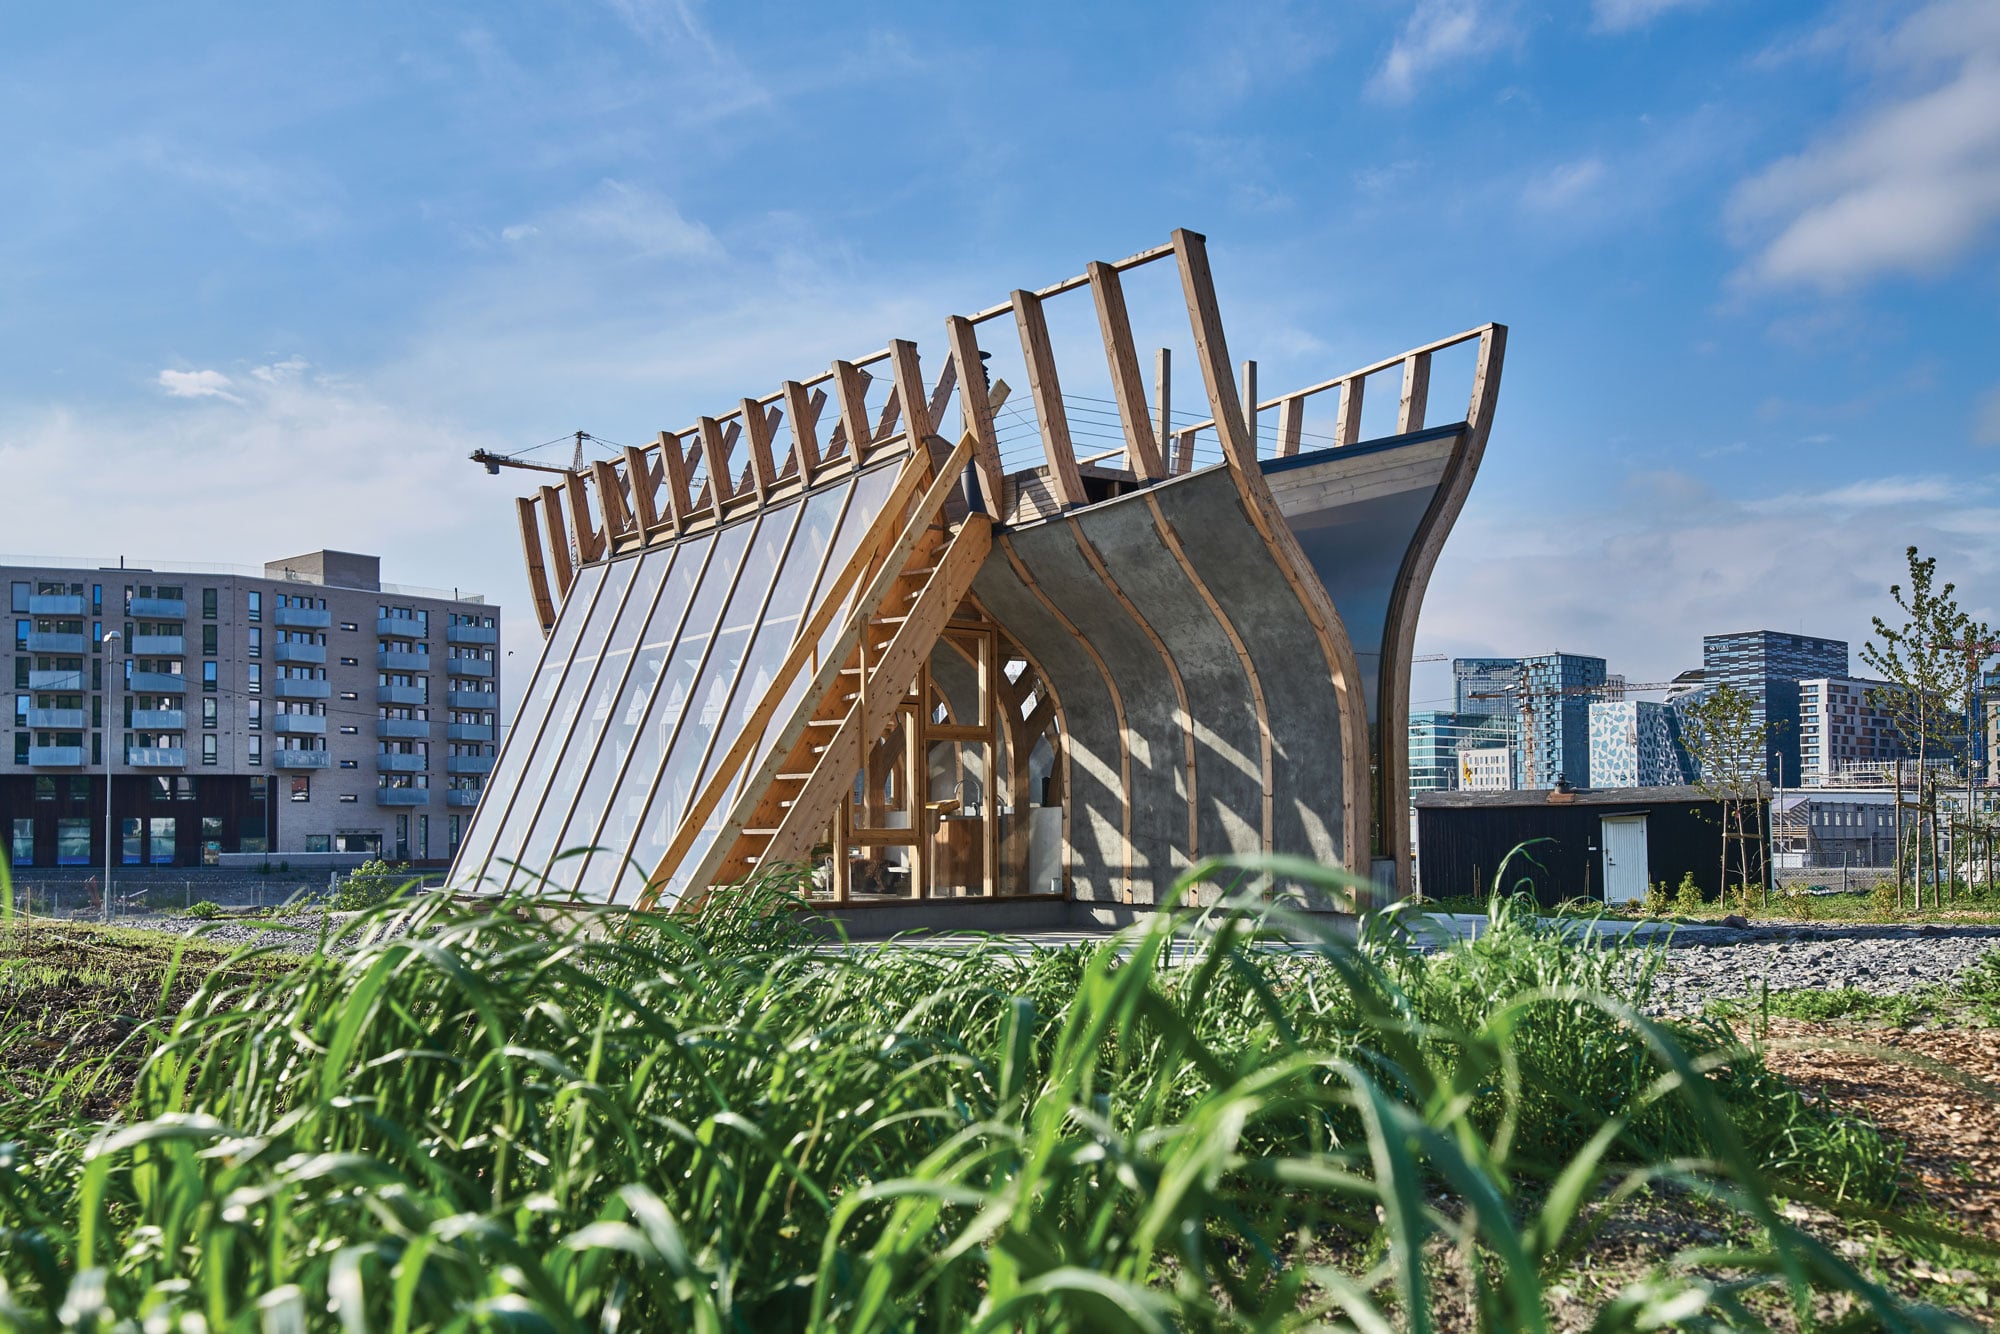 An Oslo Urban Farm Combines Food, Art, and Community